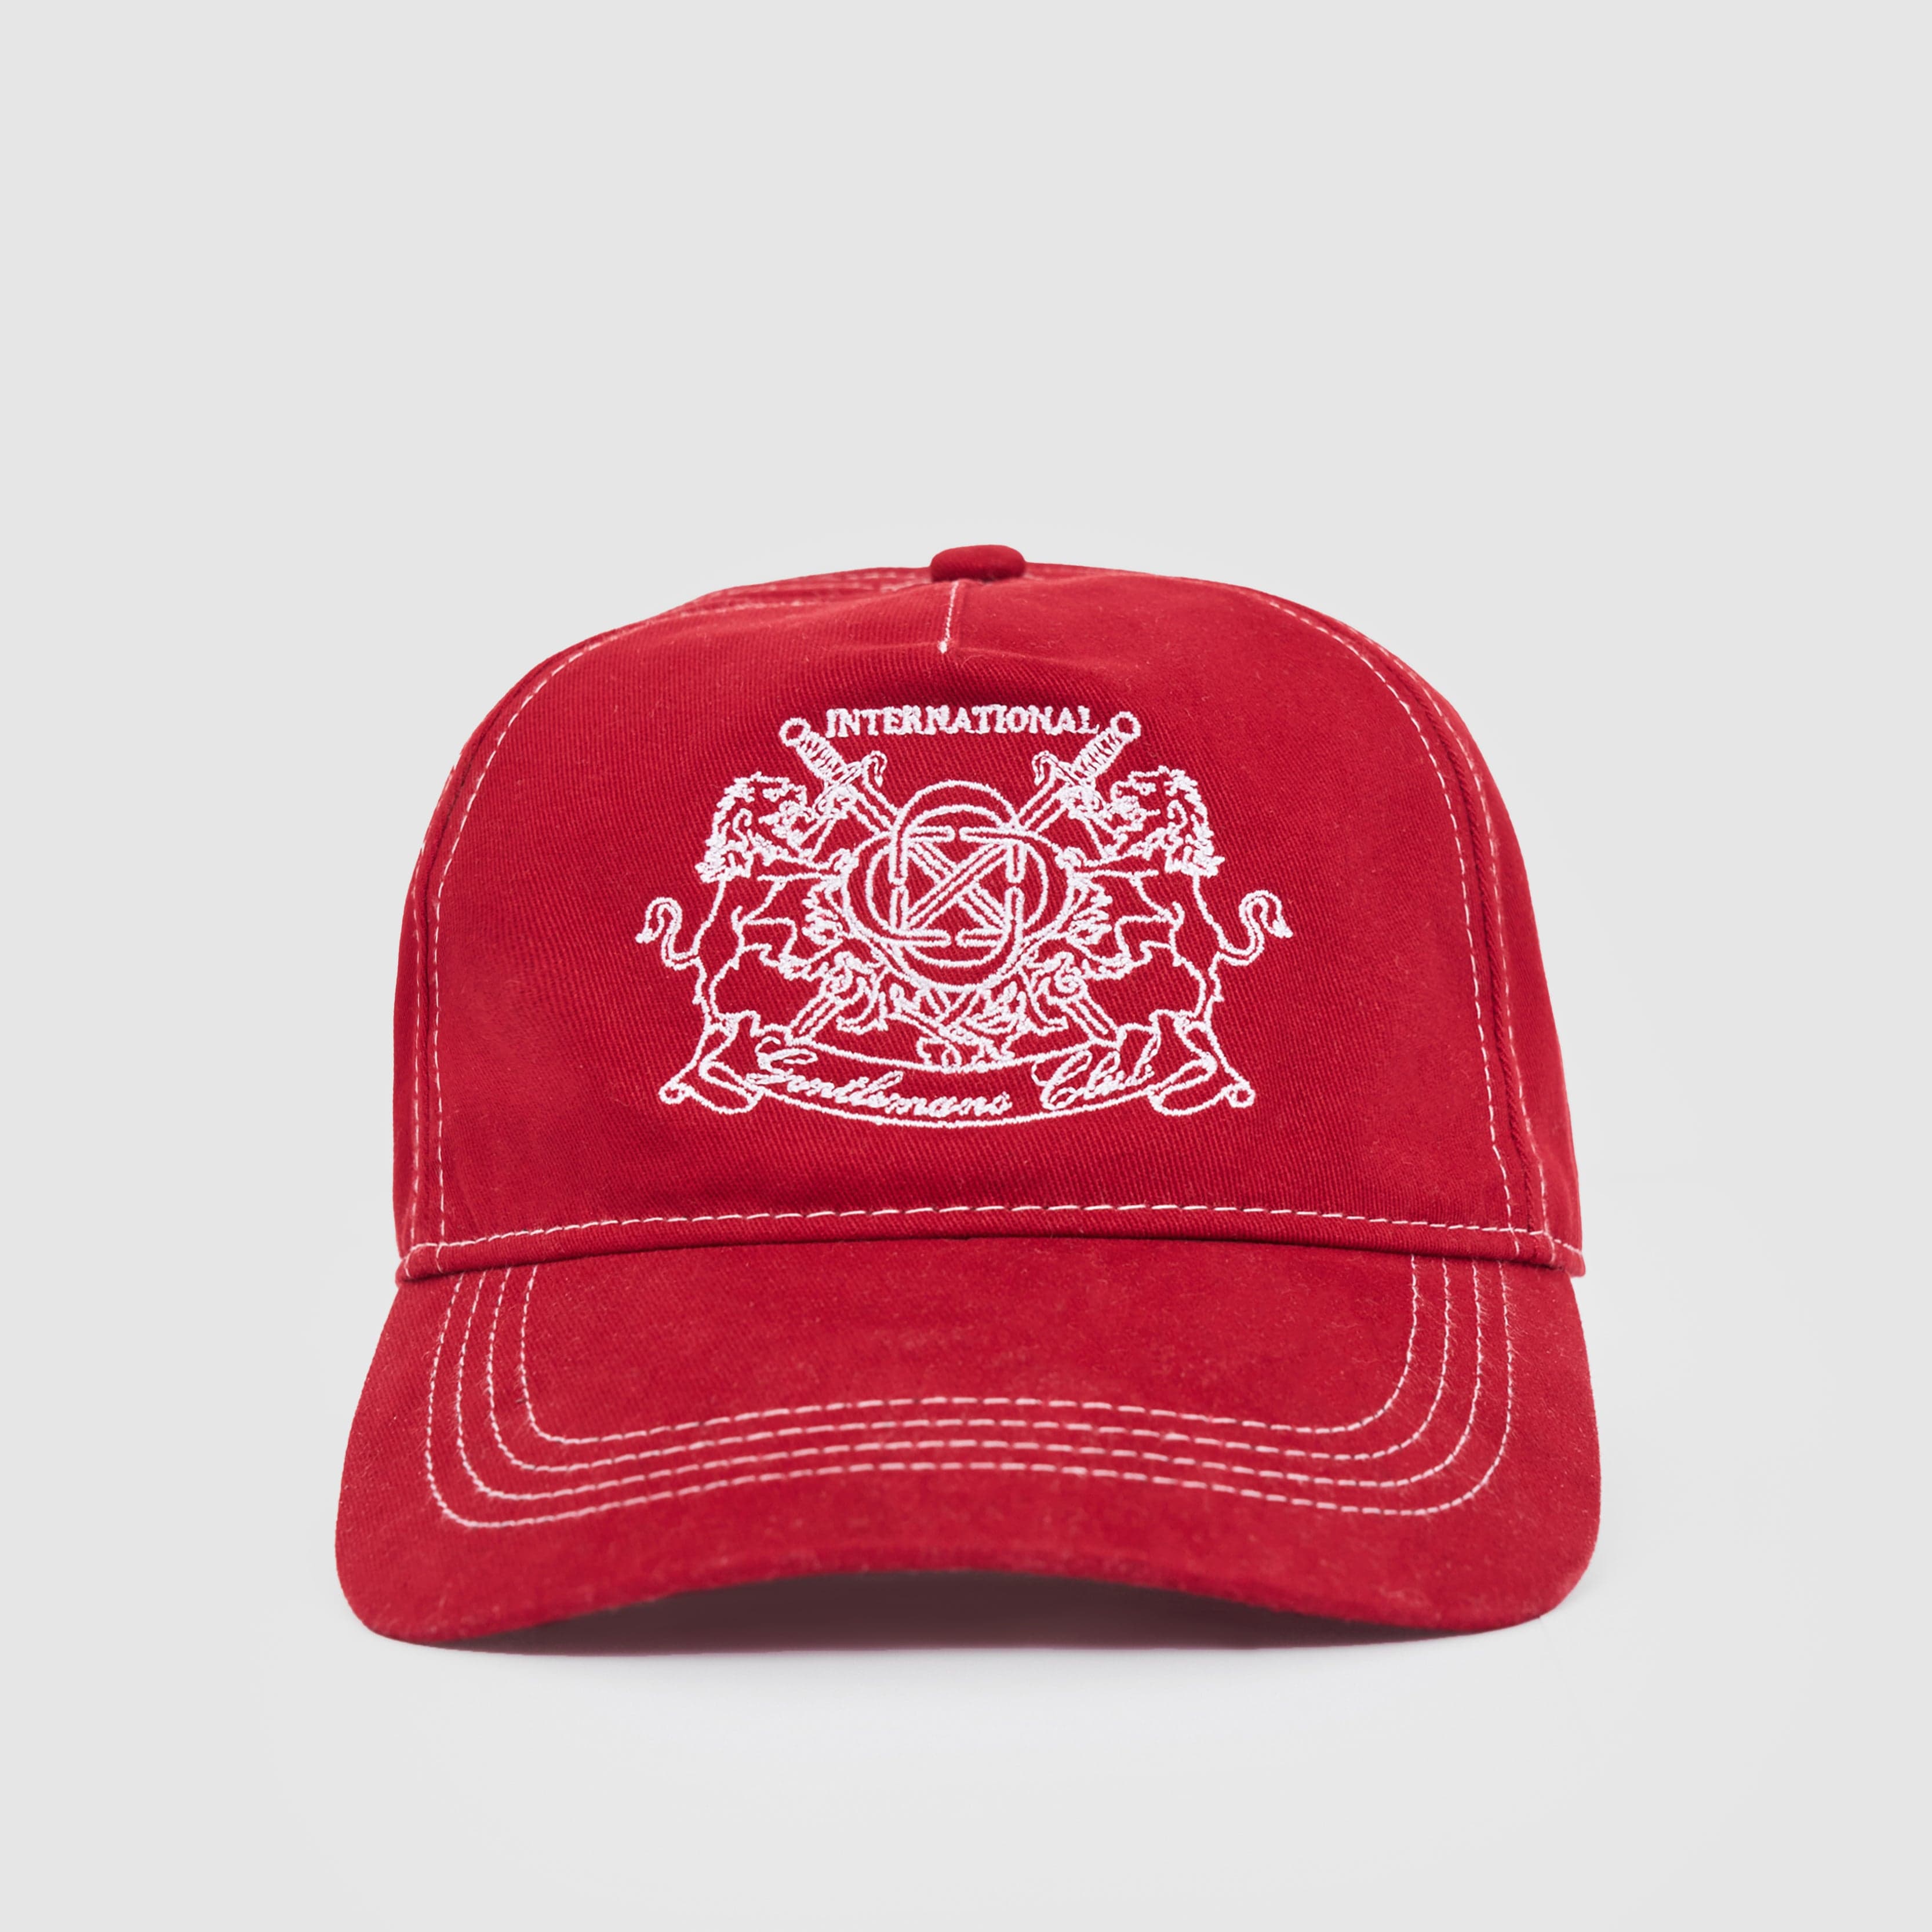 Gentlemen's Club Cap (Red/White)